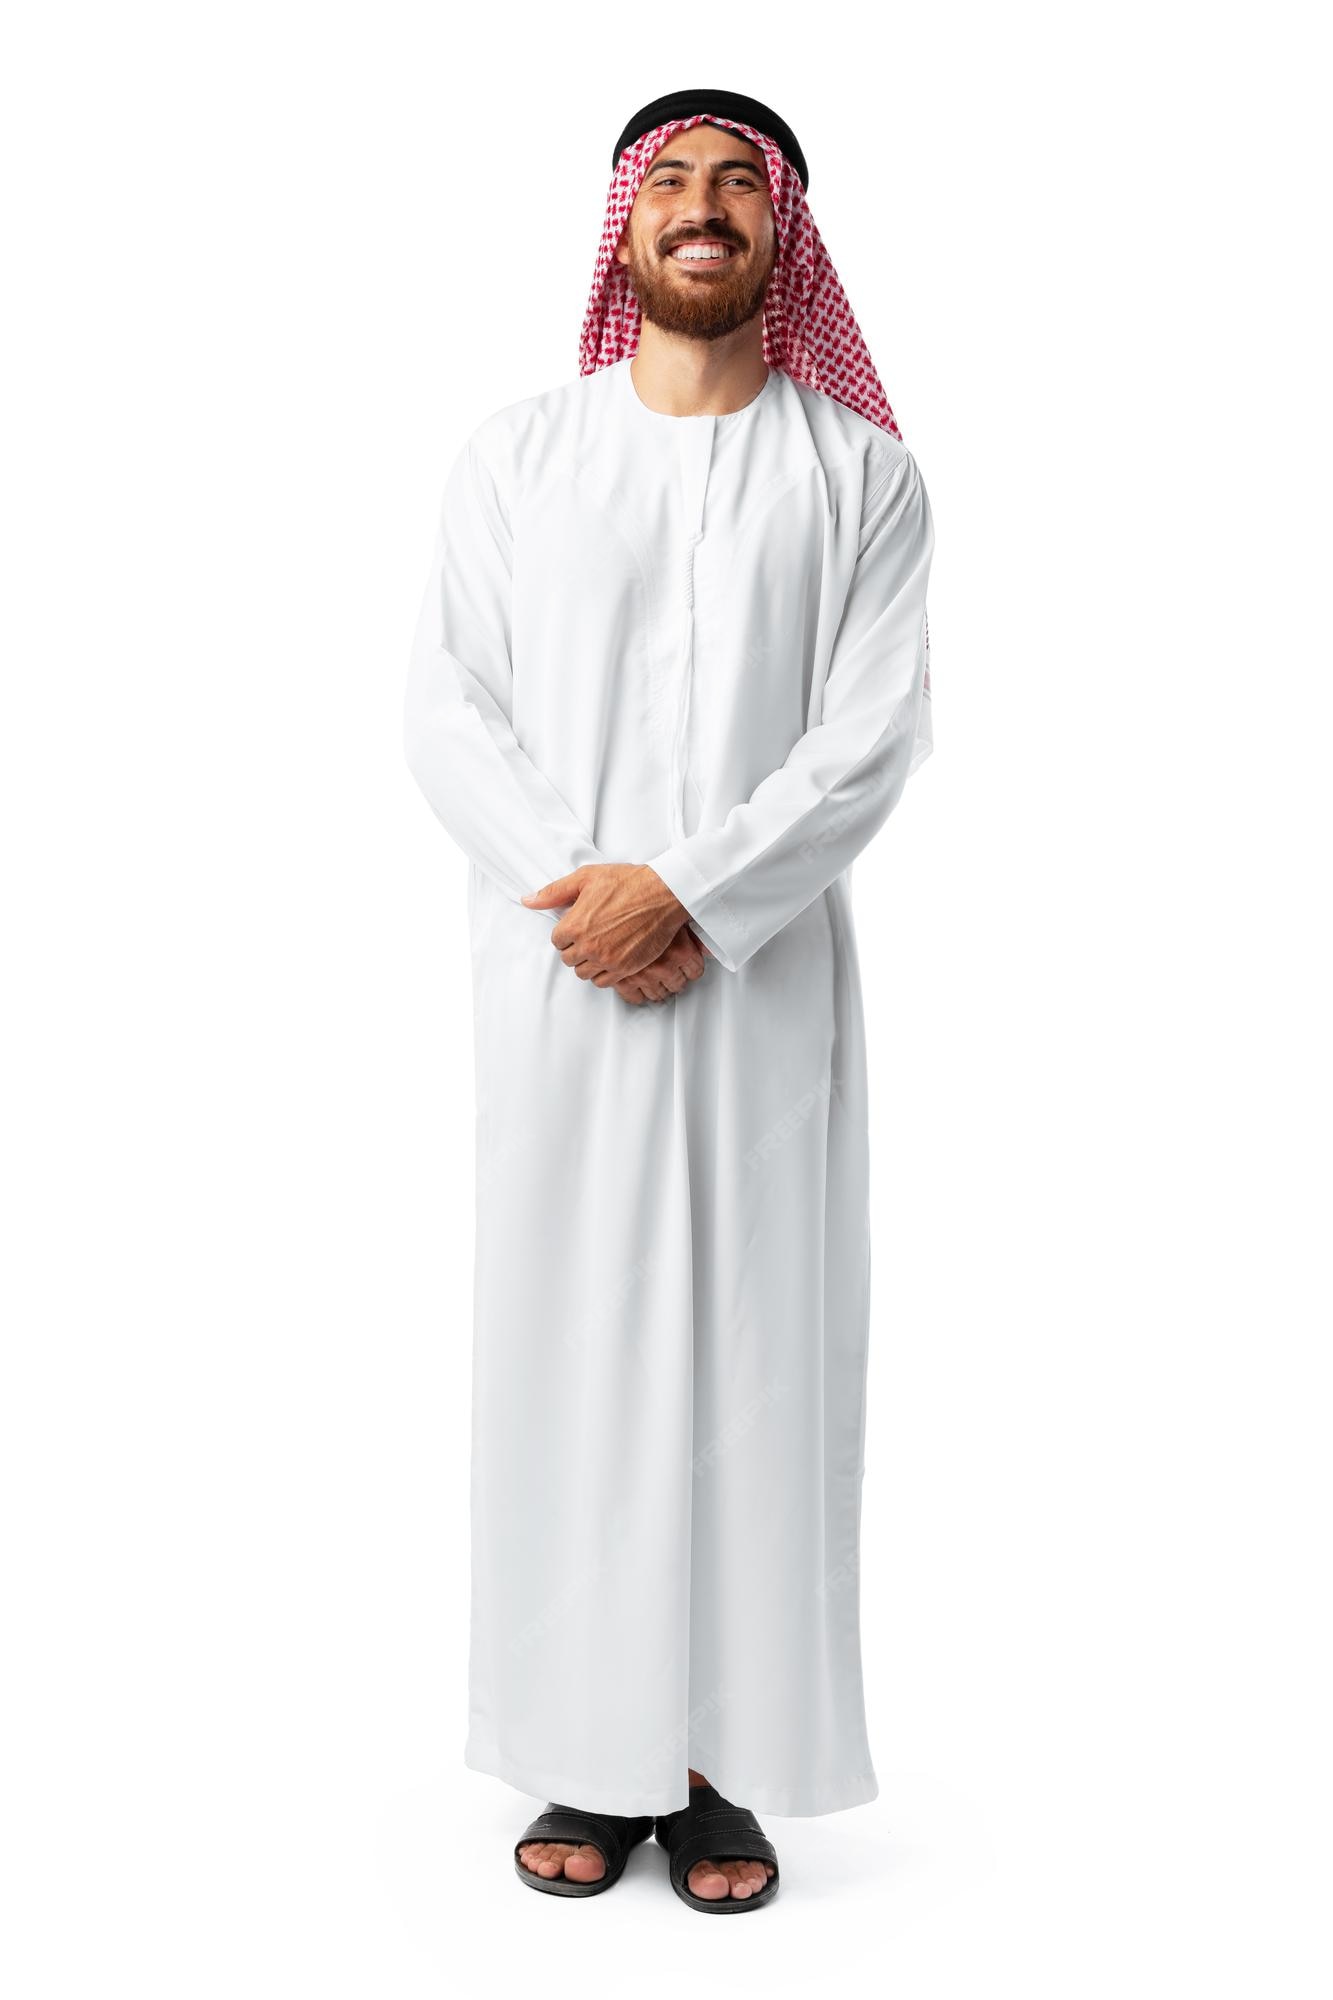 Premium Photo | Smiling arab man while standing in a white studio